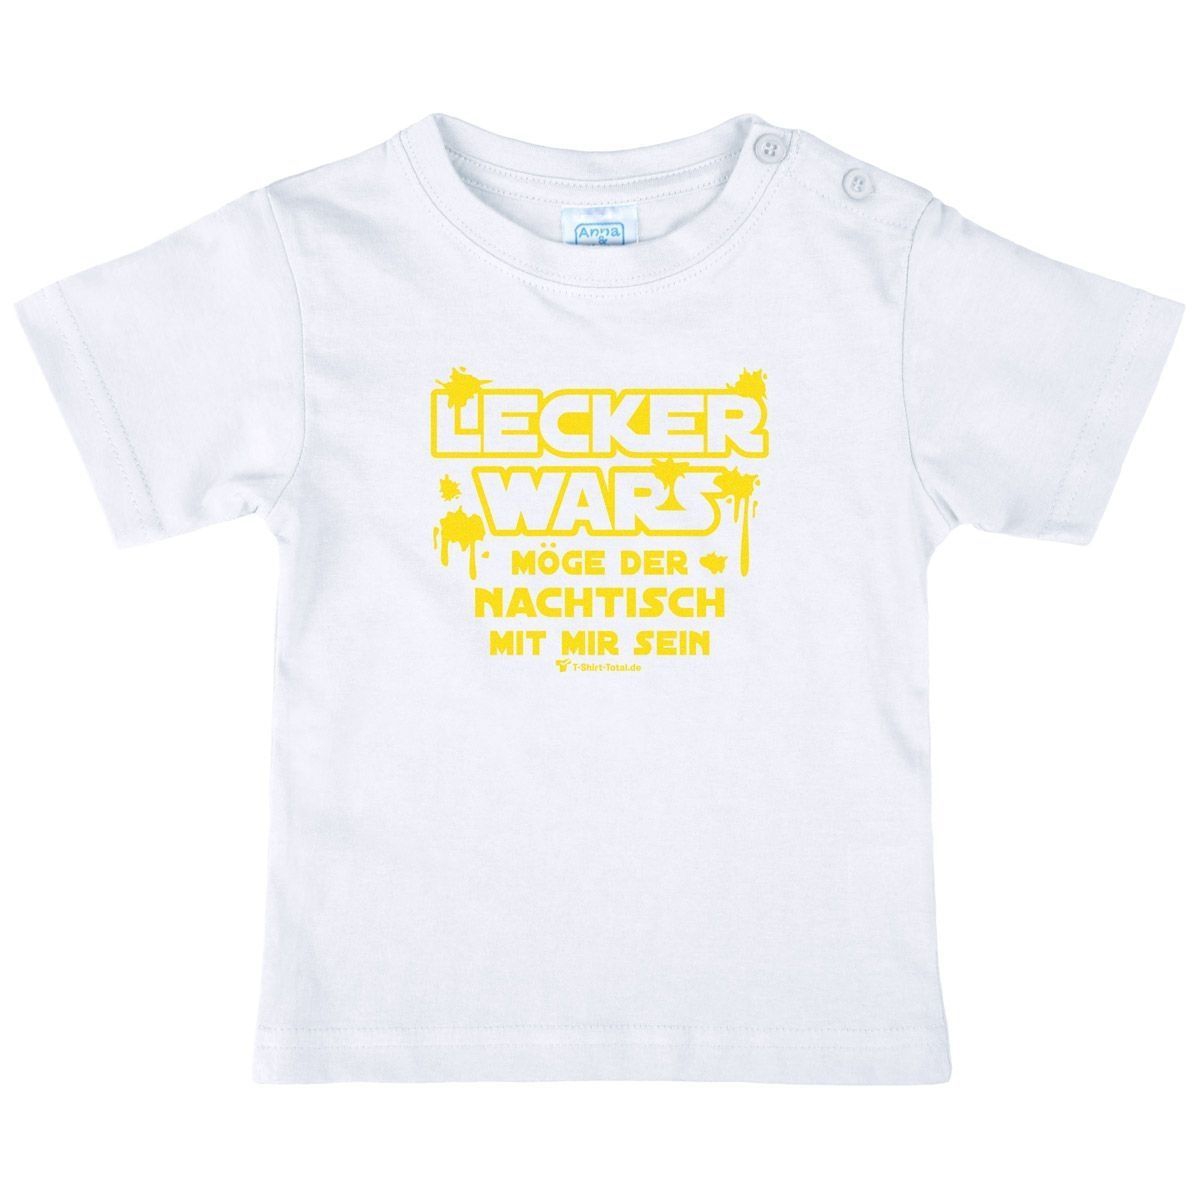 Lecker wars Kinder T-Shirt weiß 68 / 74